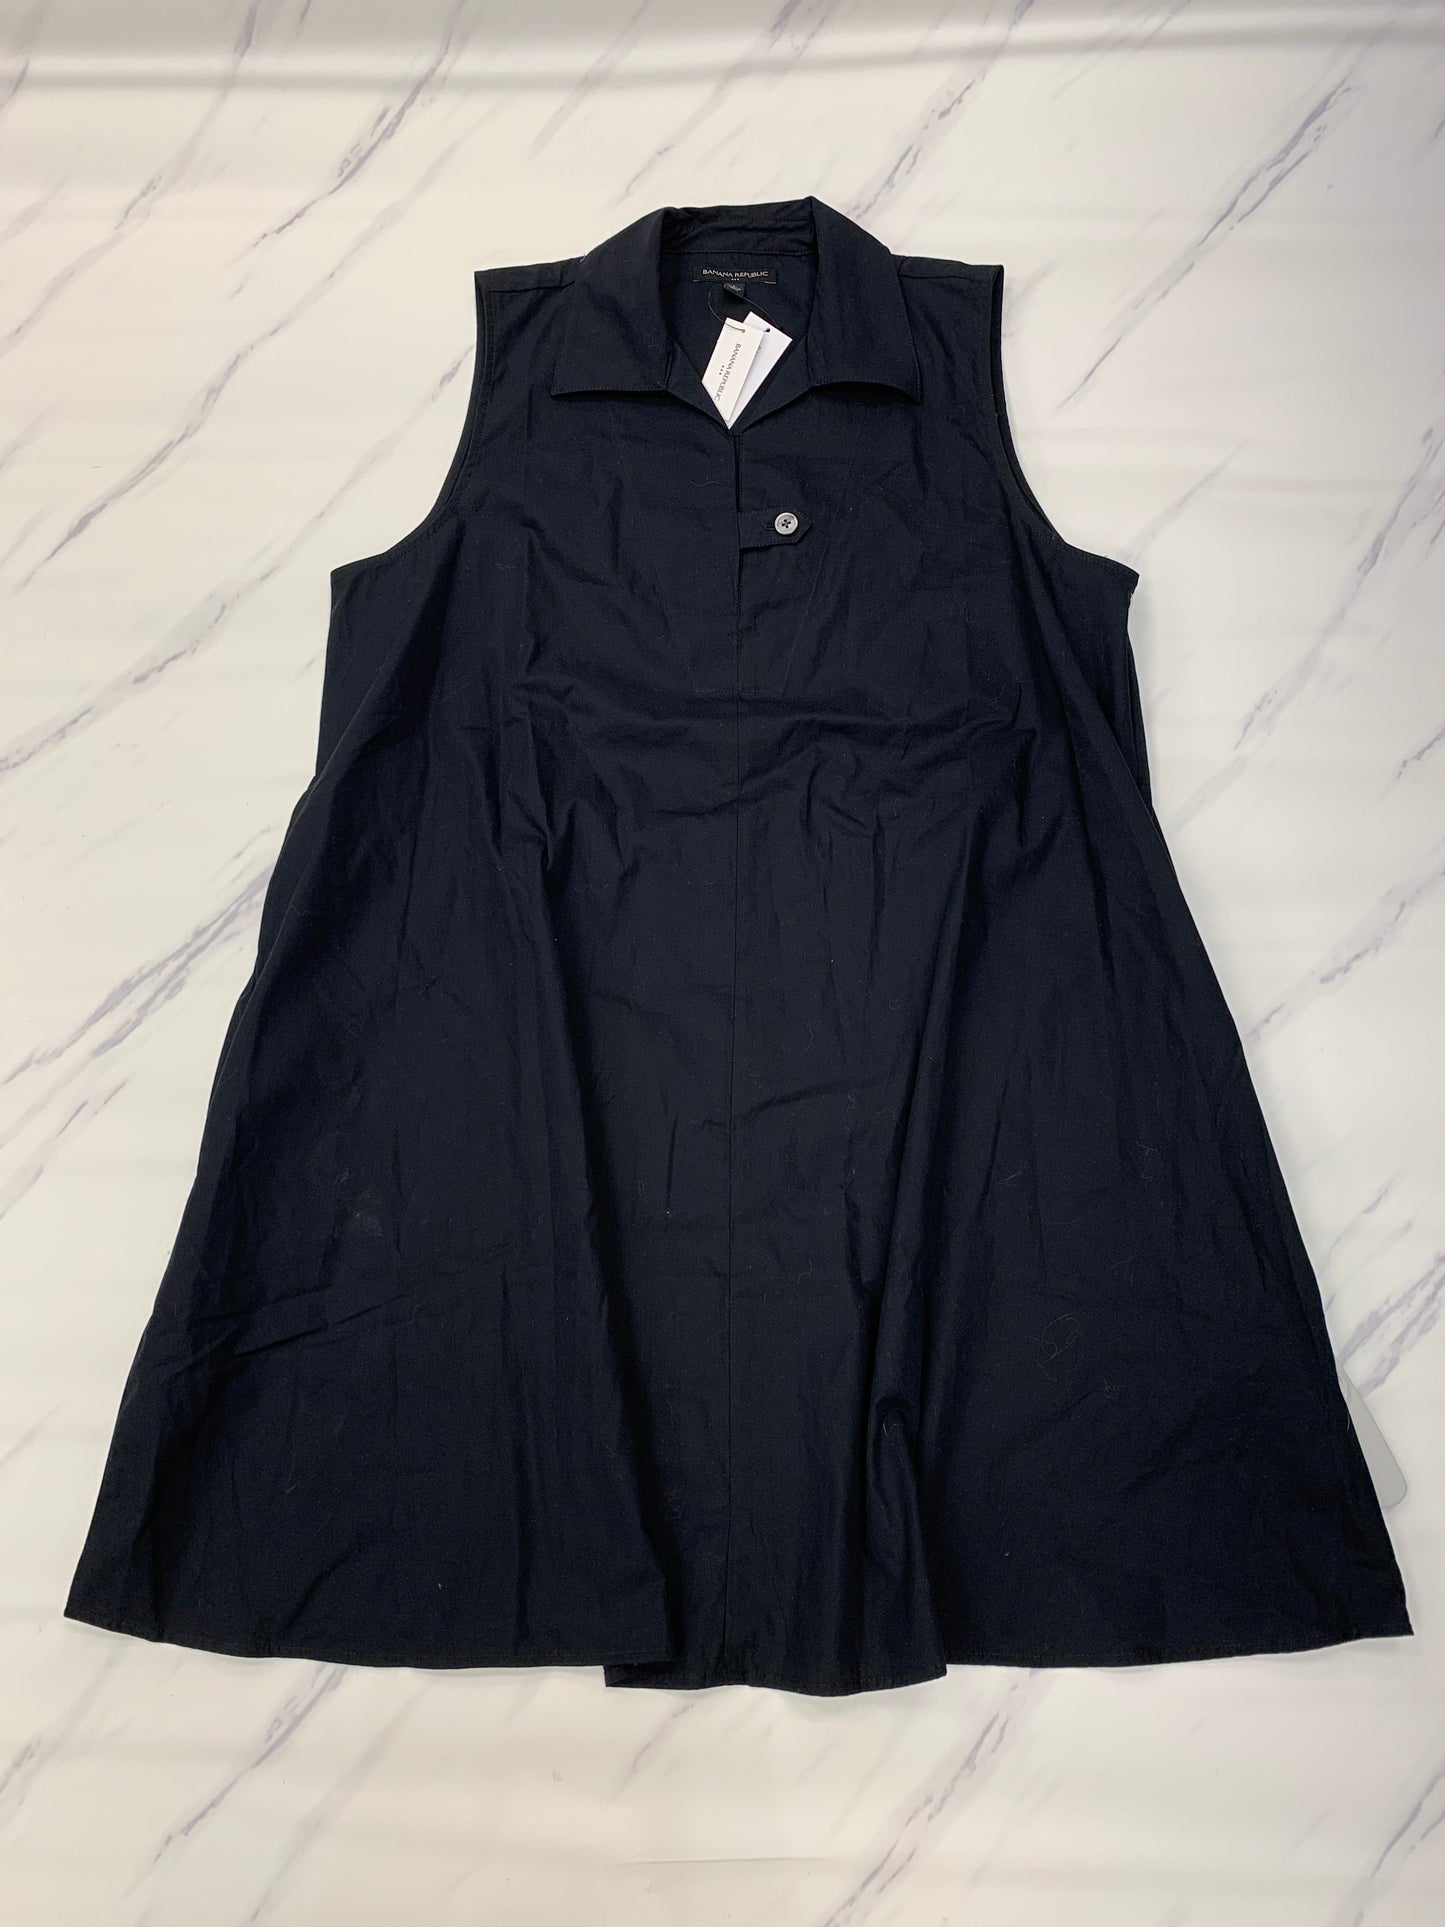 Black Dress Casual Short Banana Republic, Size L